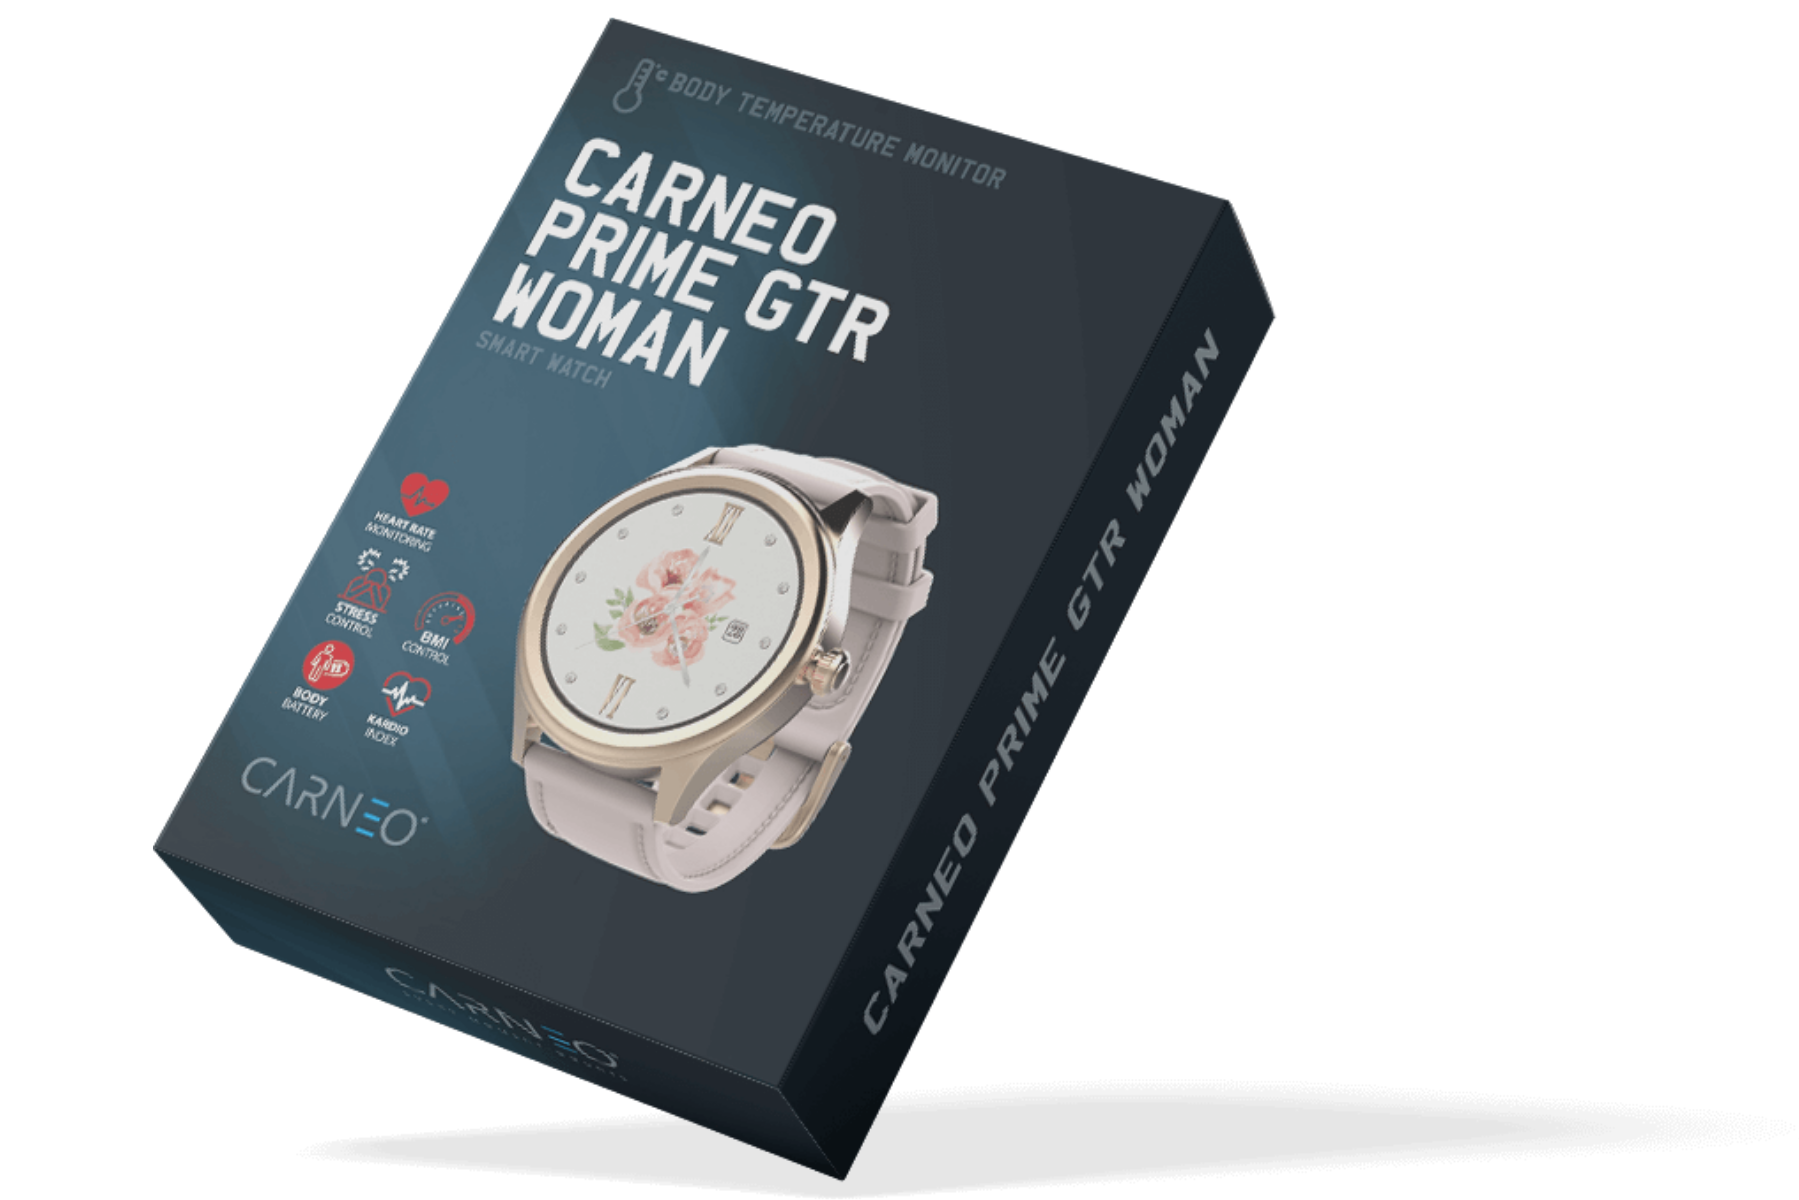 Smart hodinky Carneo Prime GTR Woman Gold uvod